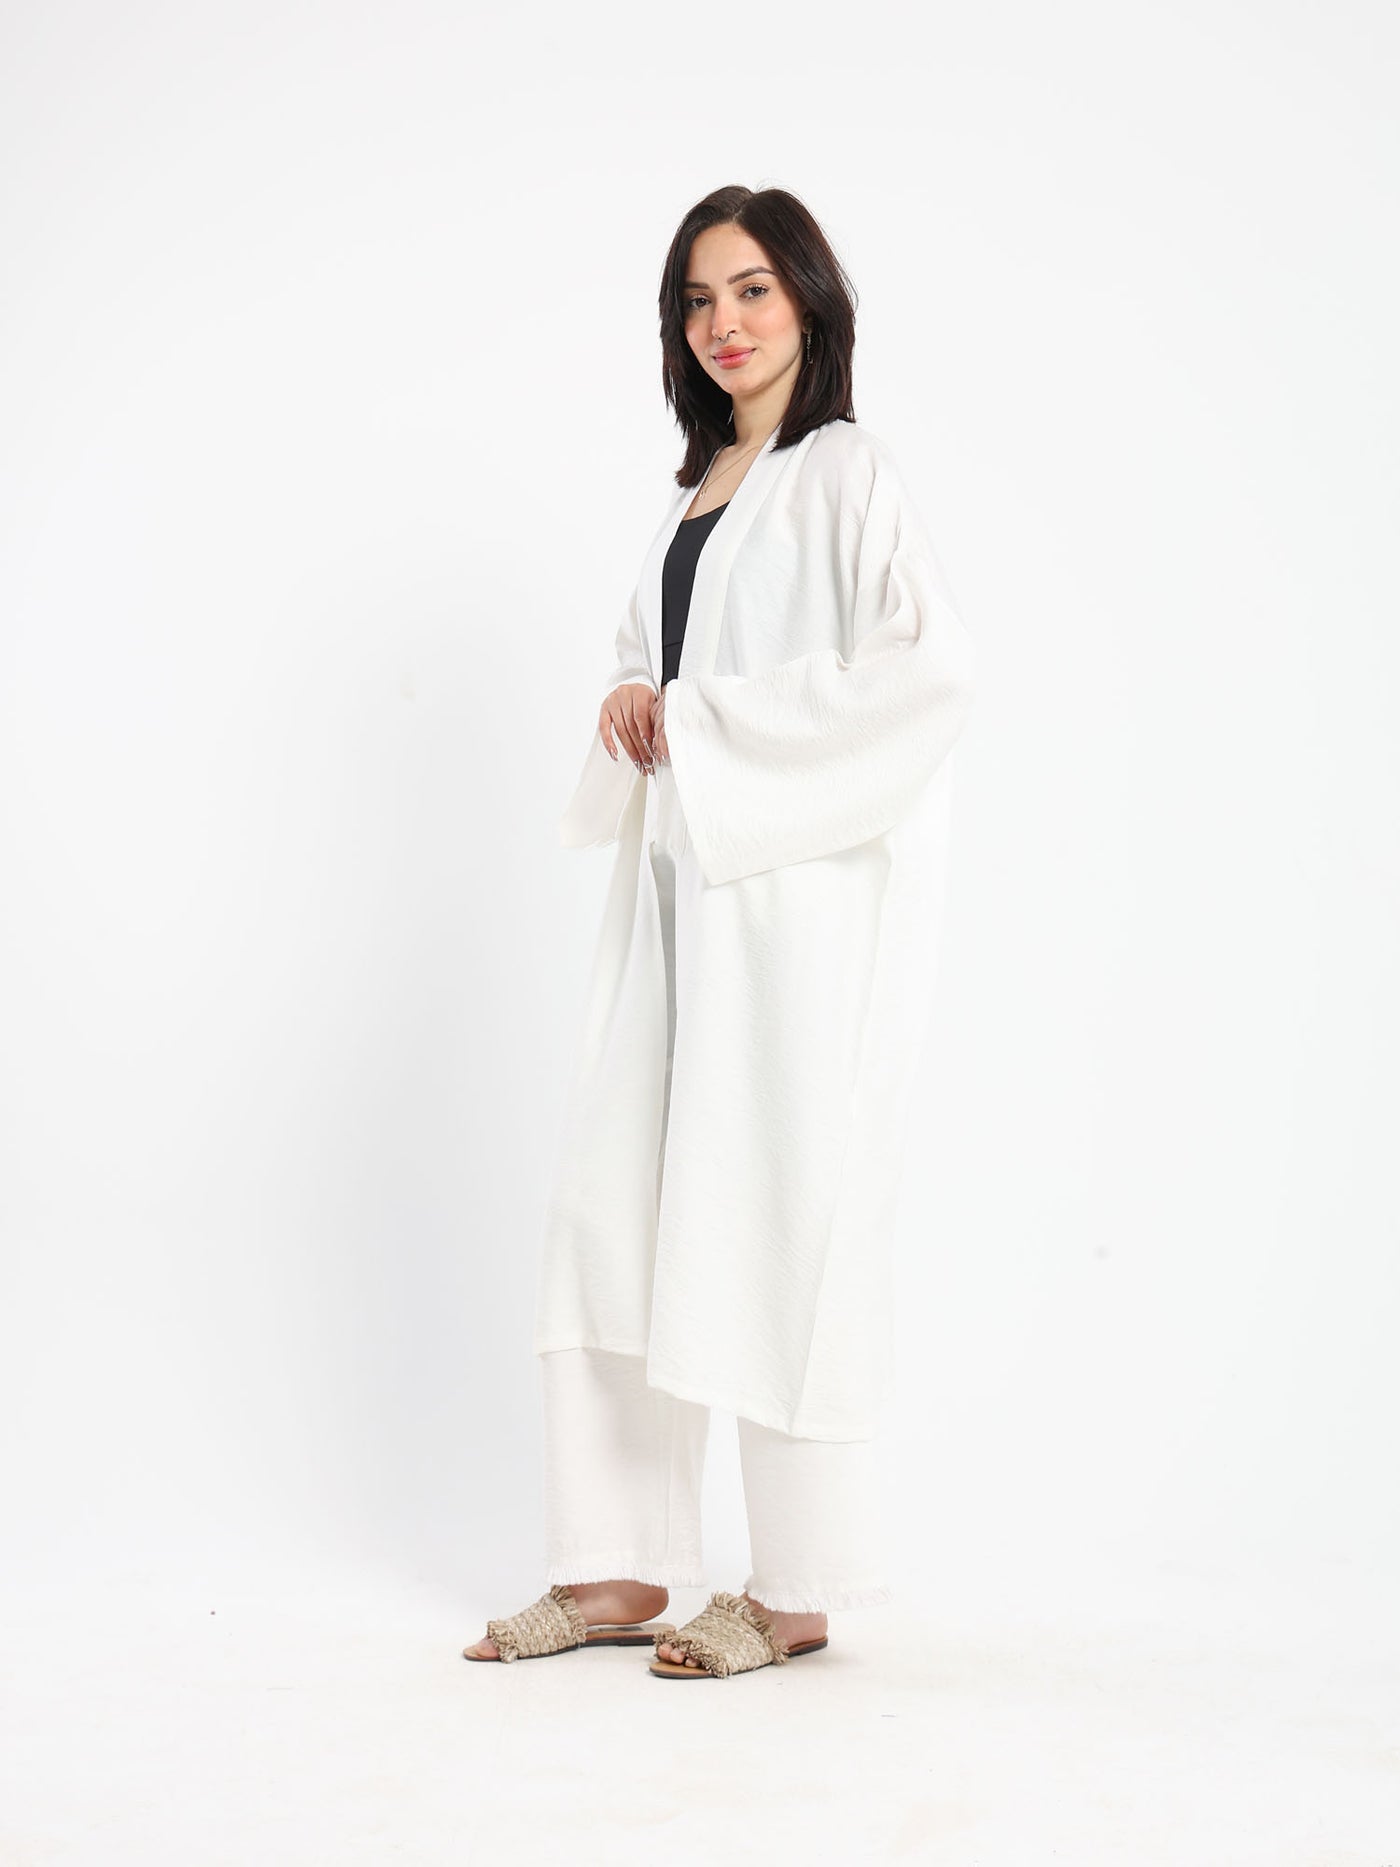 Kimono - Basic - Long